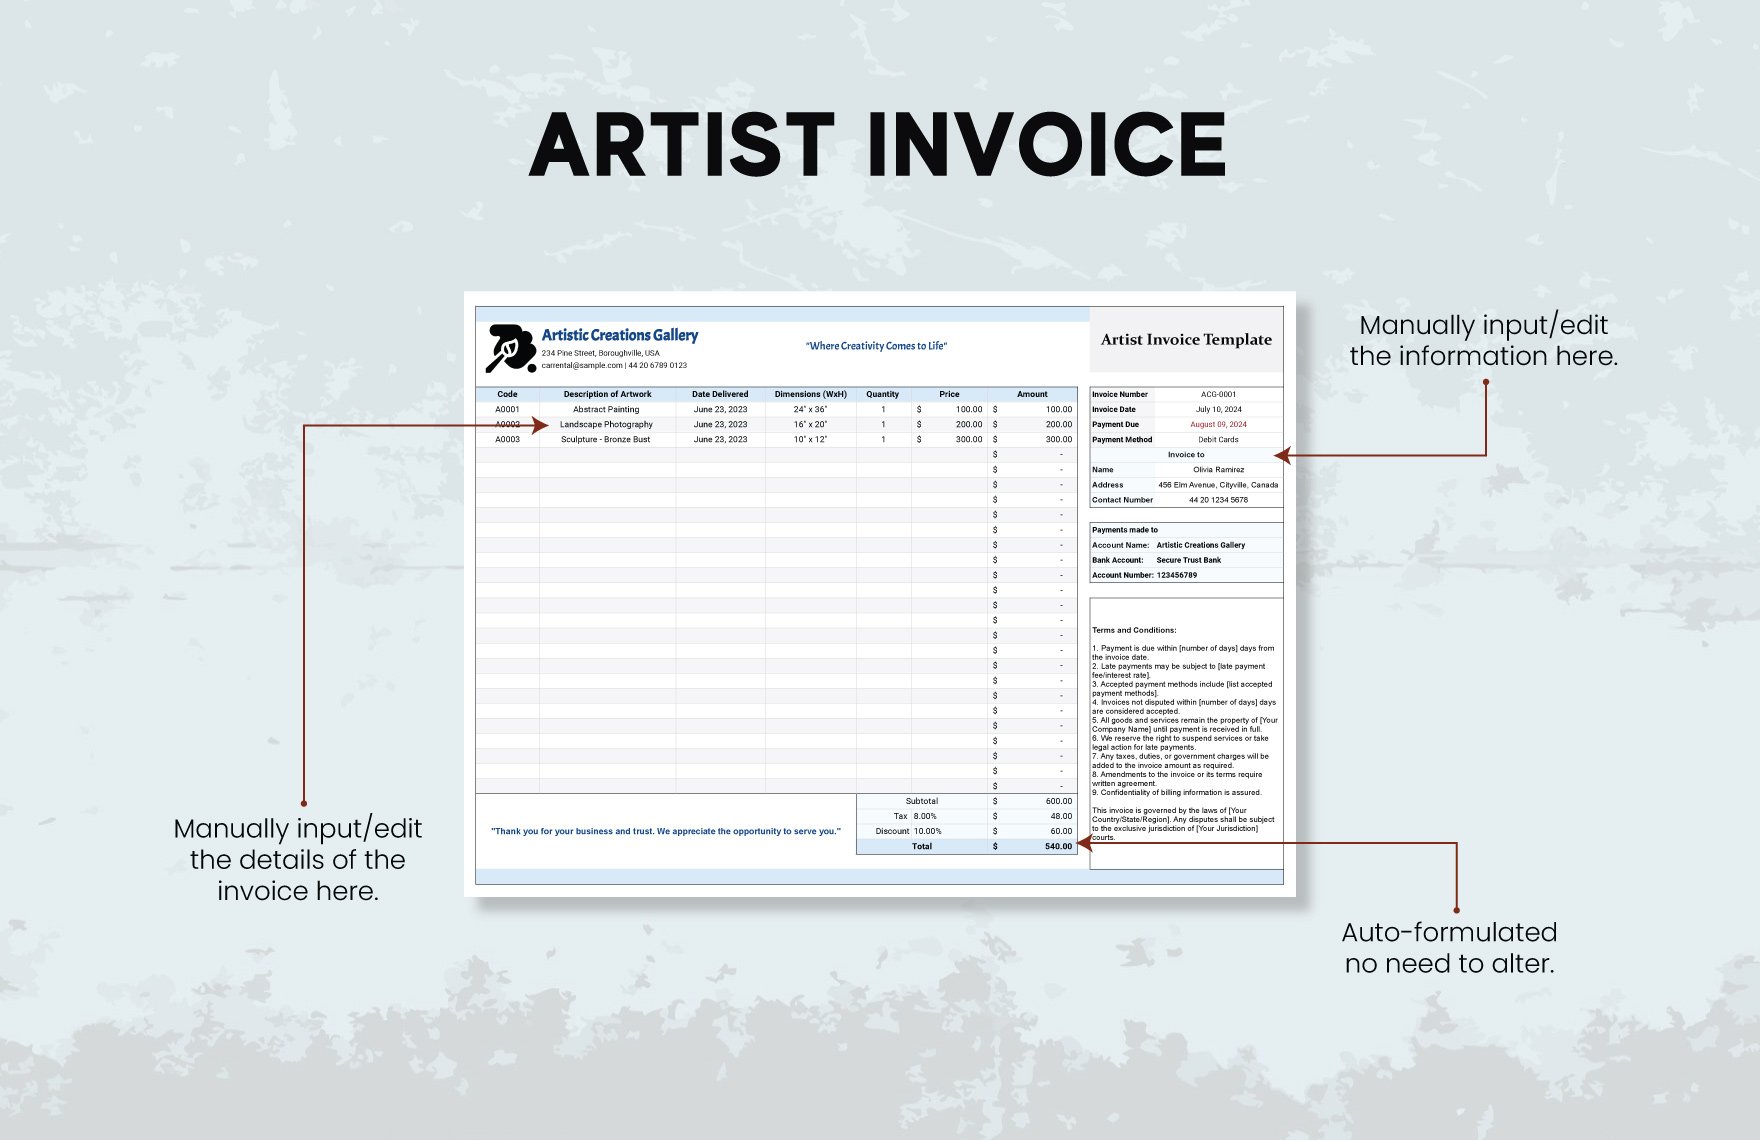 Artist Invoice Template